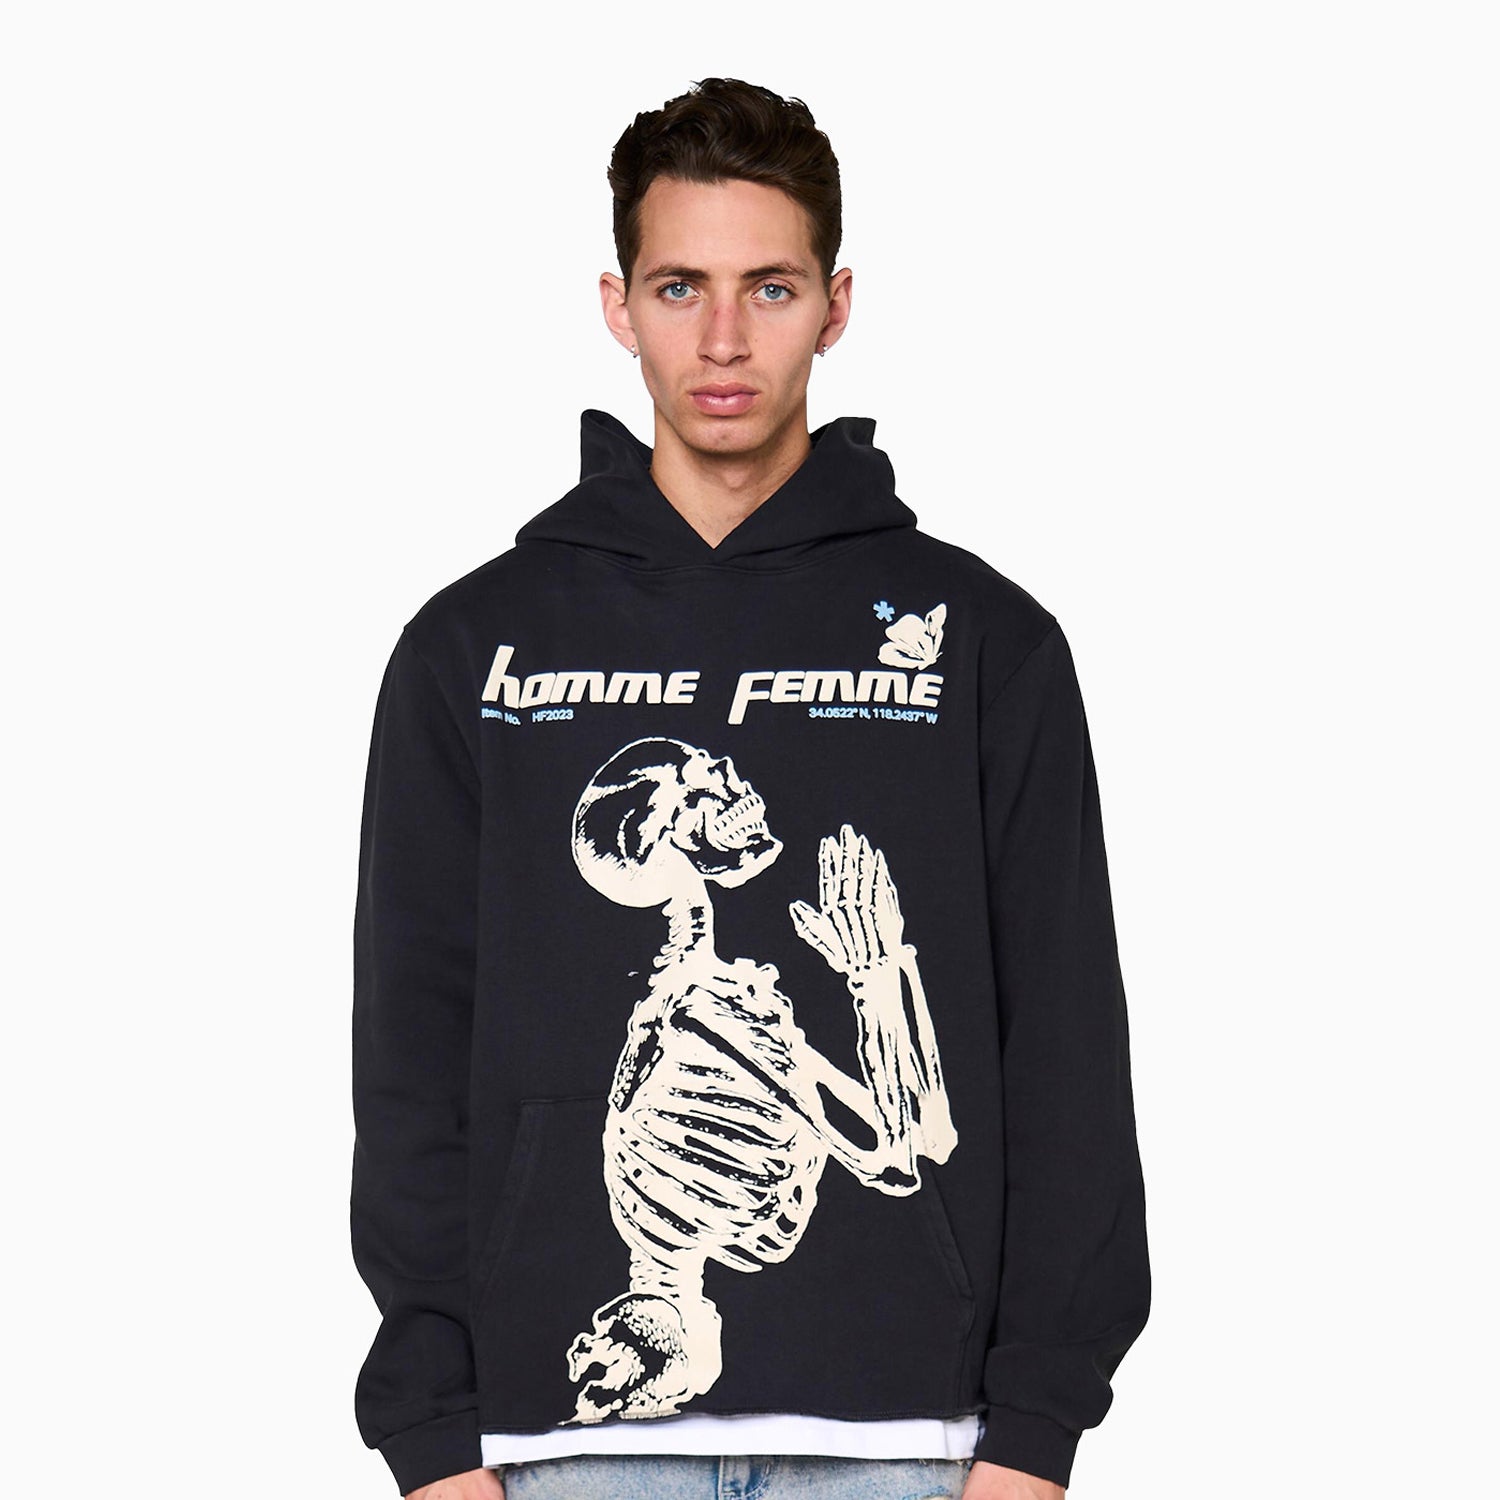 homme-femme-mens-skeleton-pull-over-hoodie-hffw202306-1